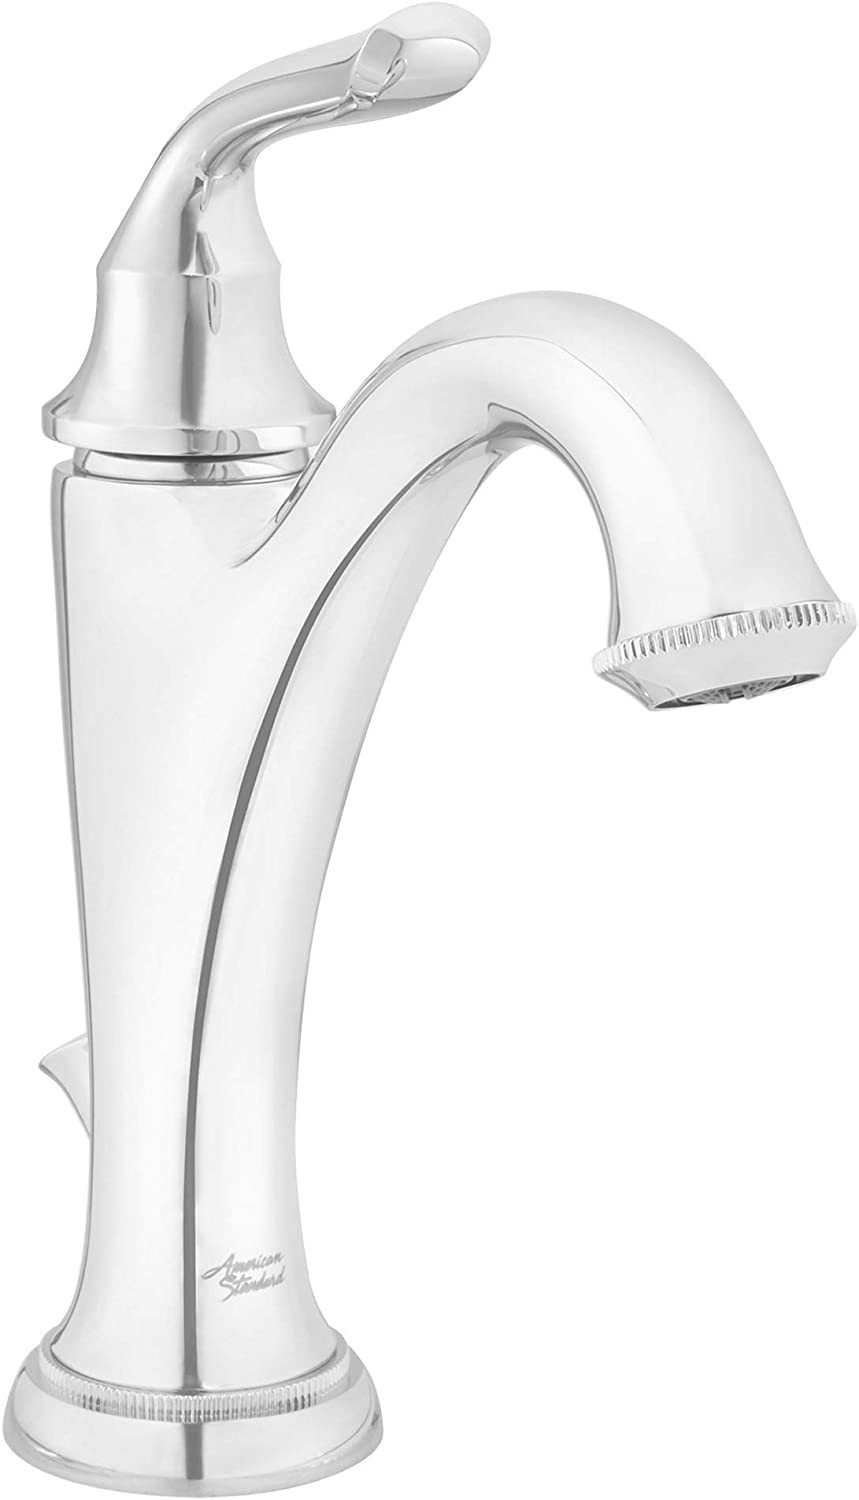 American Standard 7106101.002 Patience Single Hole Bathroom Faucet, Polished Chrome